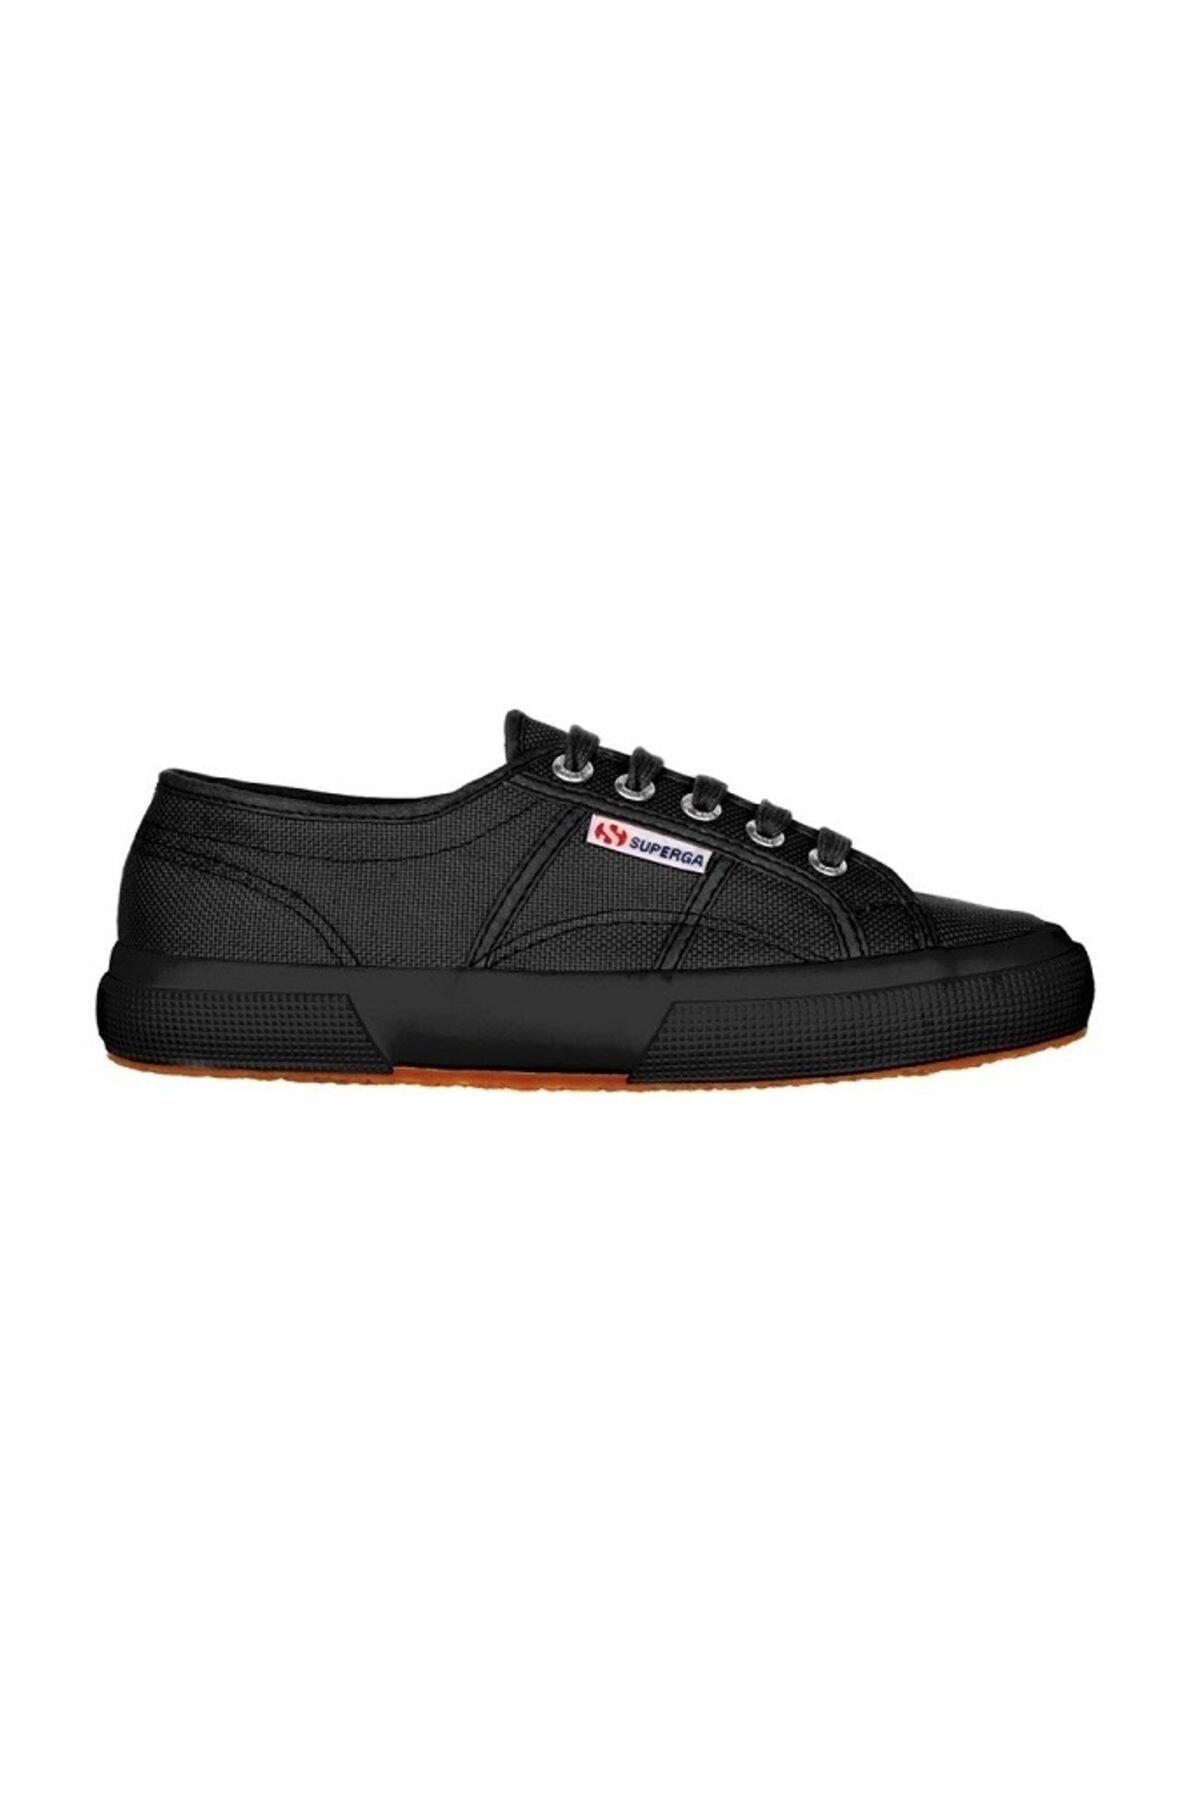 Superga 2750-cotu Classic Unisex Siyah Sneaker Ayakkabı S000010-996